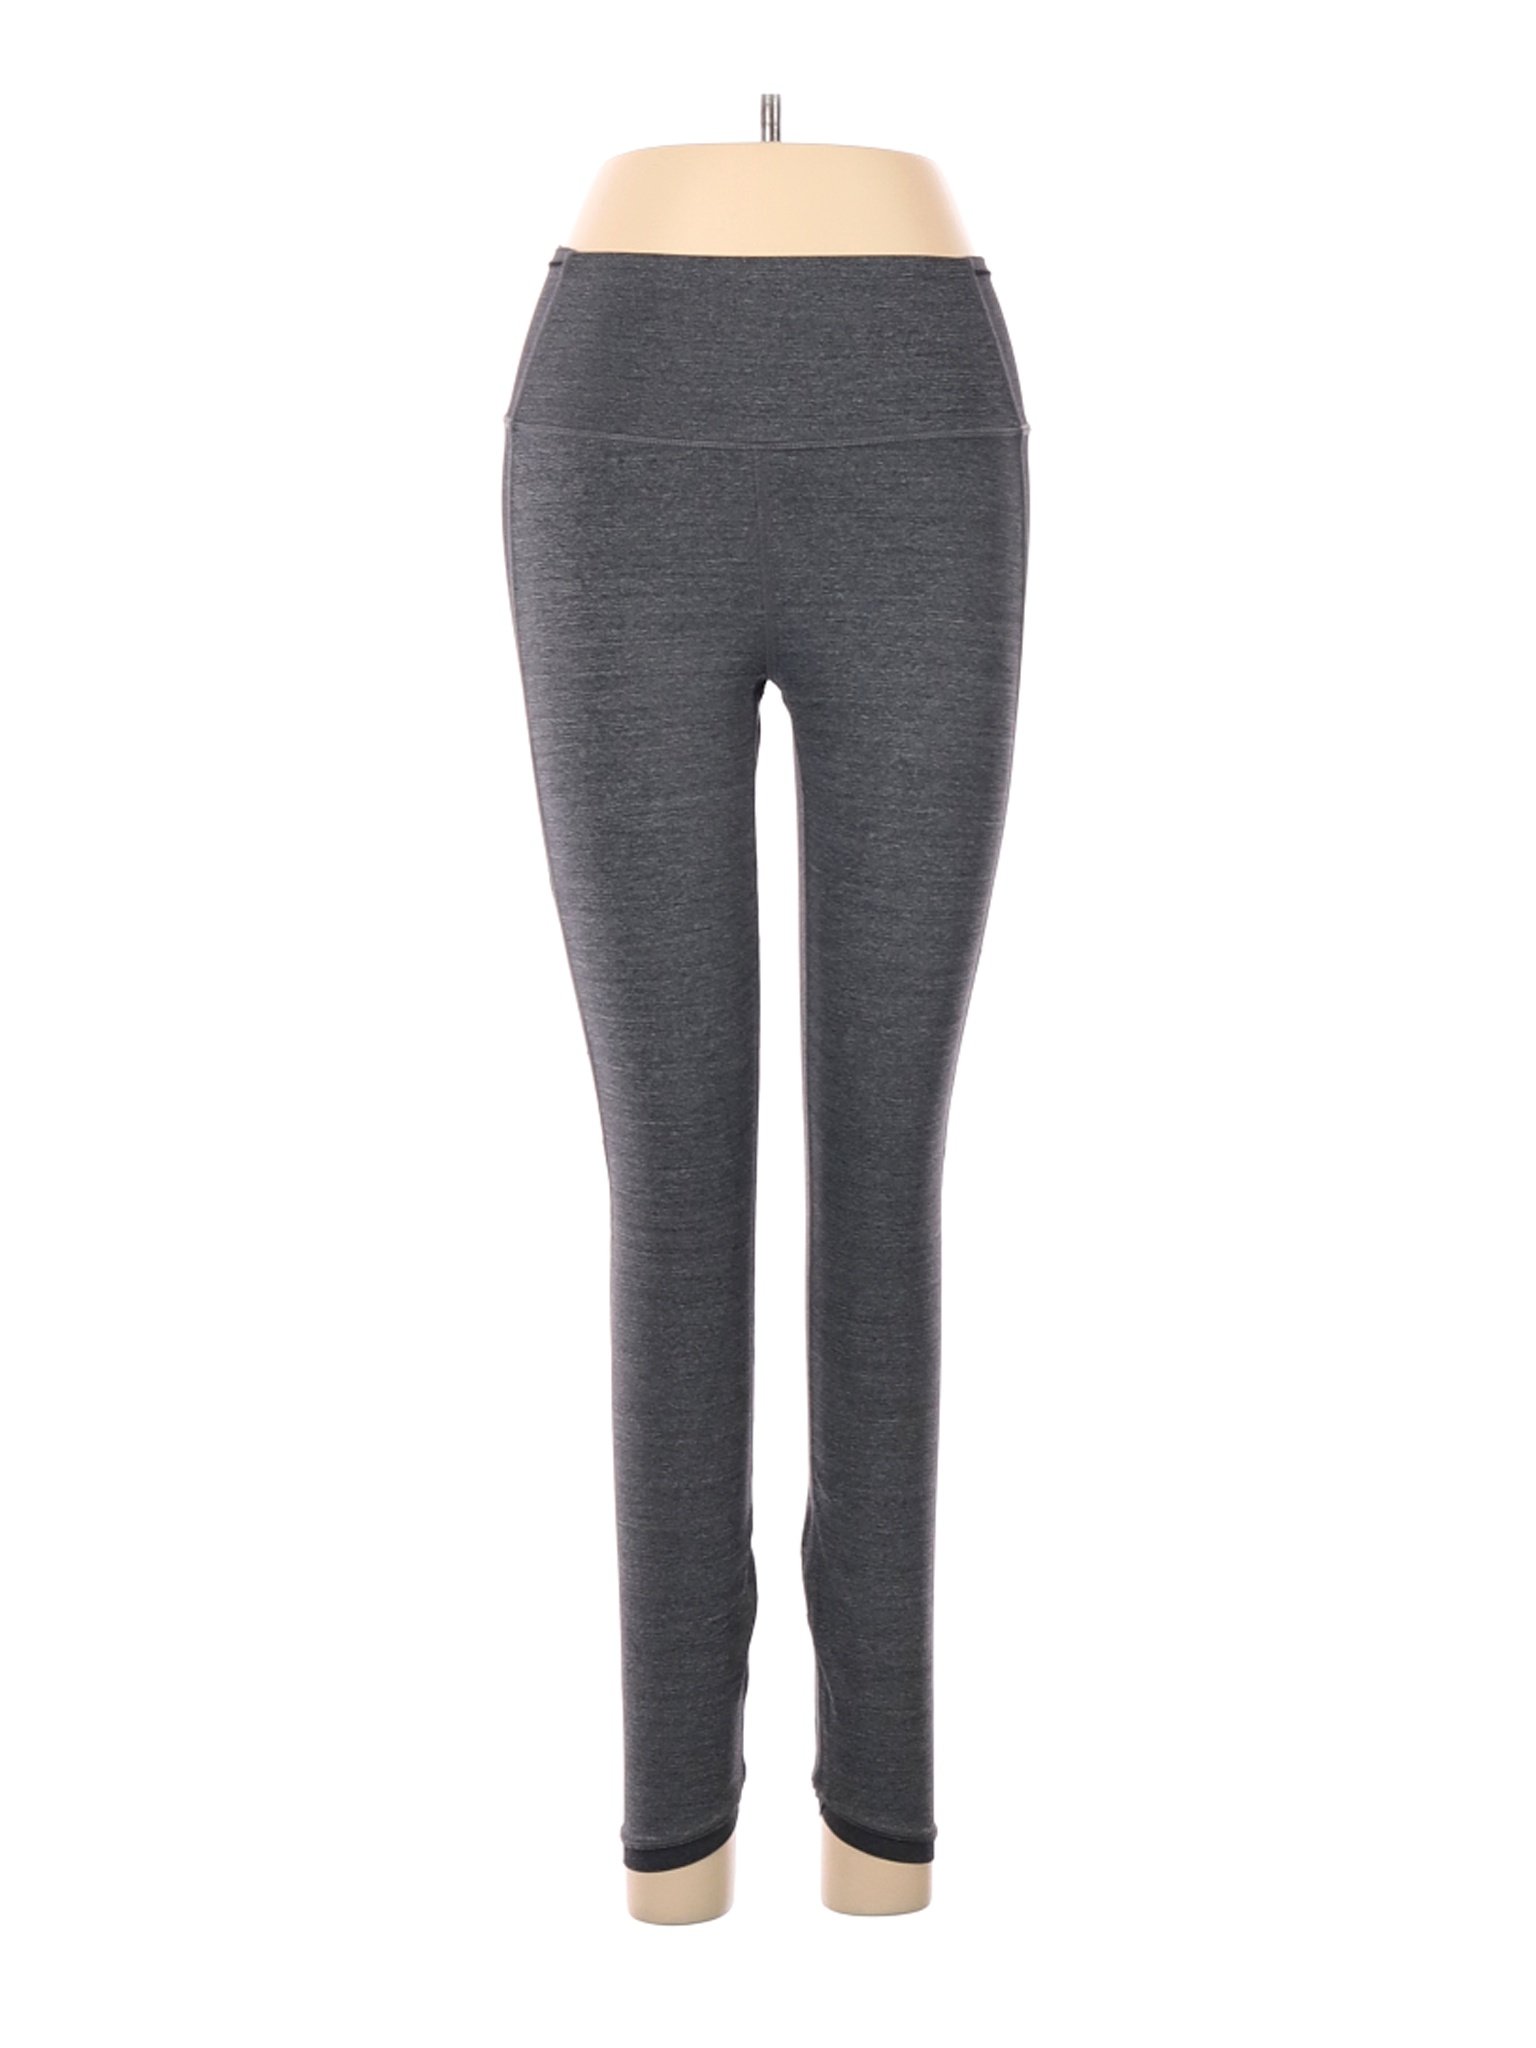 Lululemon Athletica Women Gray Active Pants 6 | eBay